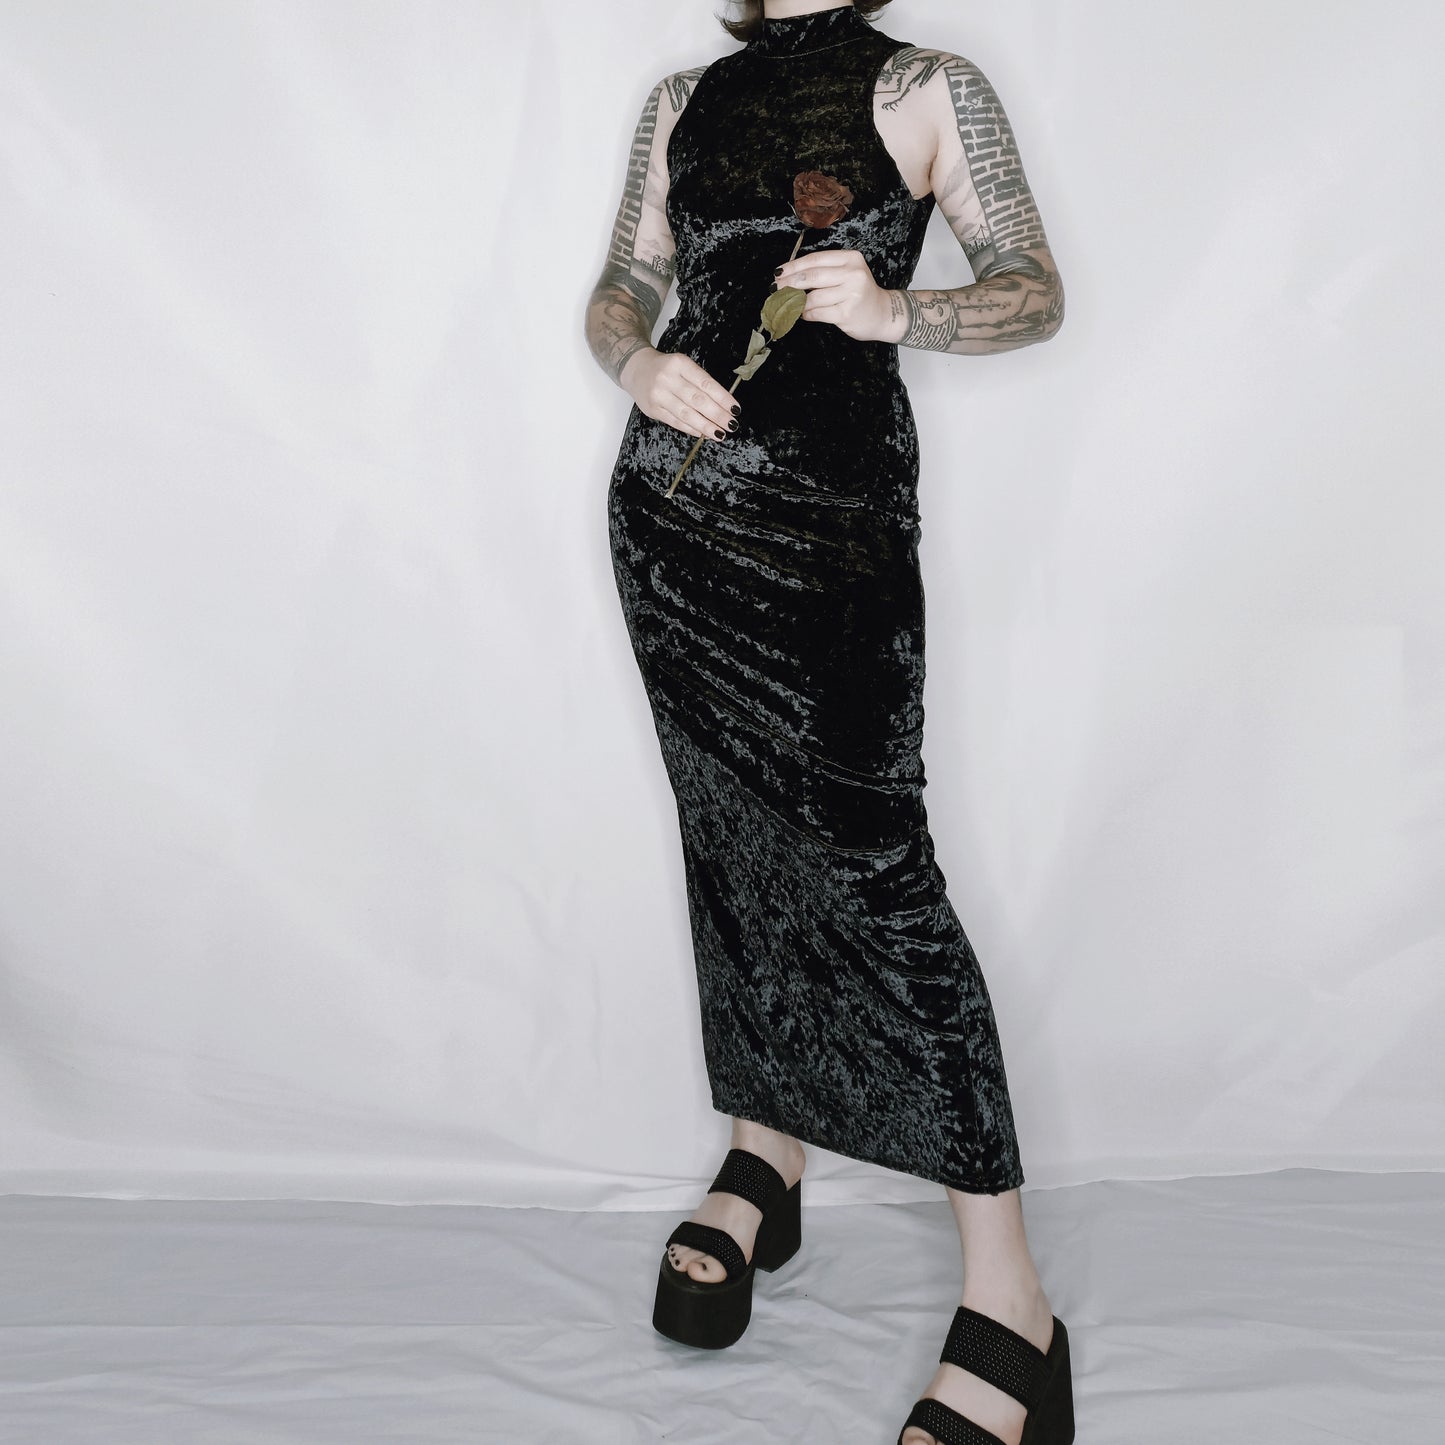 Colourshift Black Gold Halter Dress - S/M